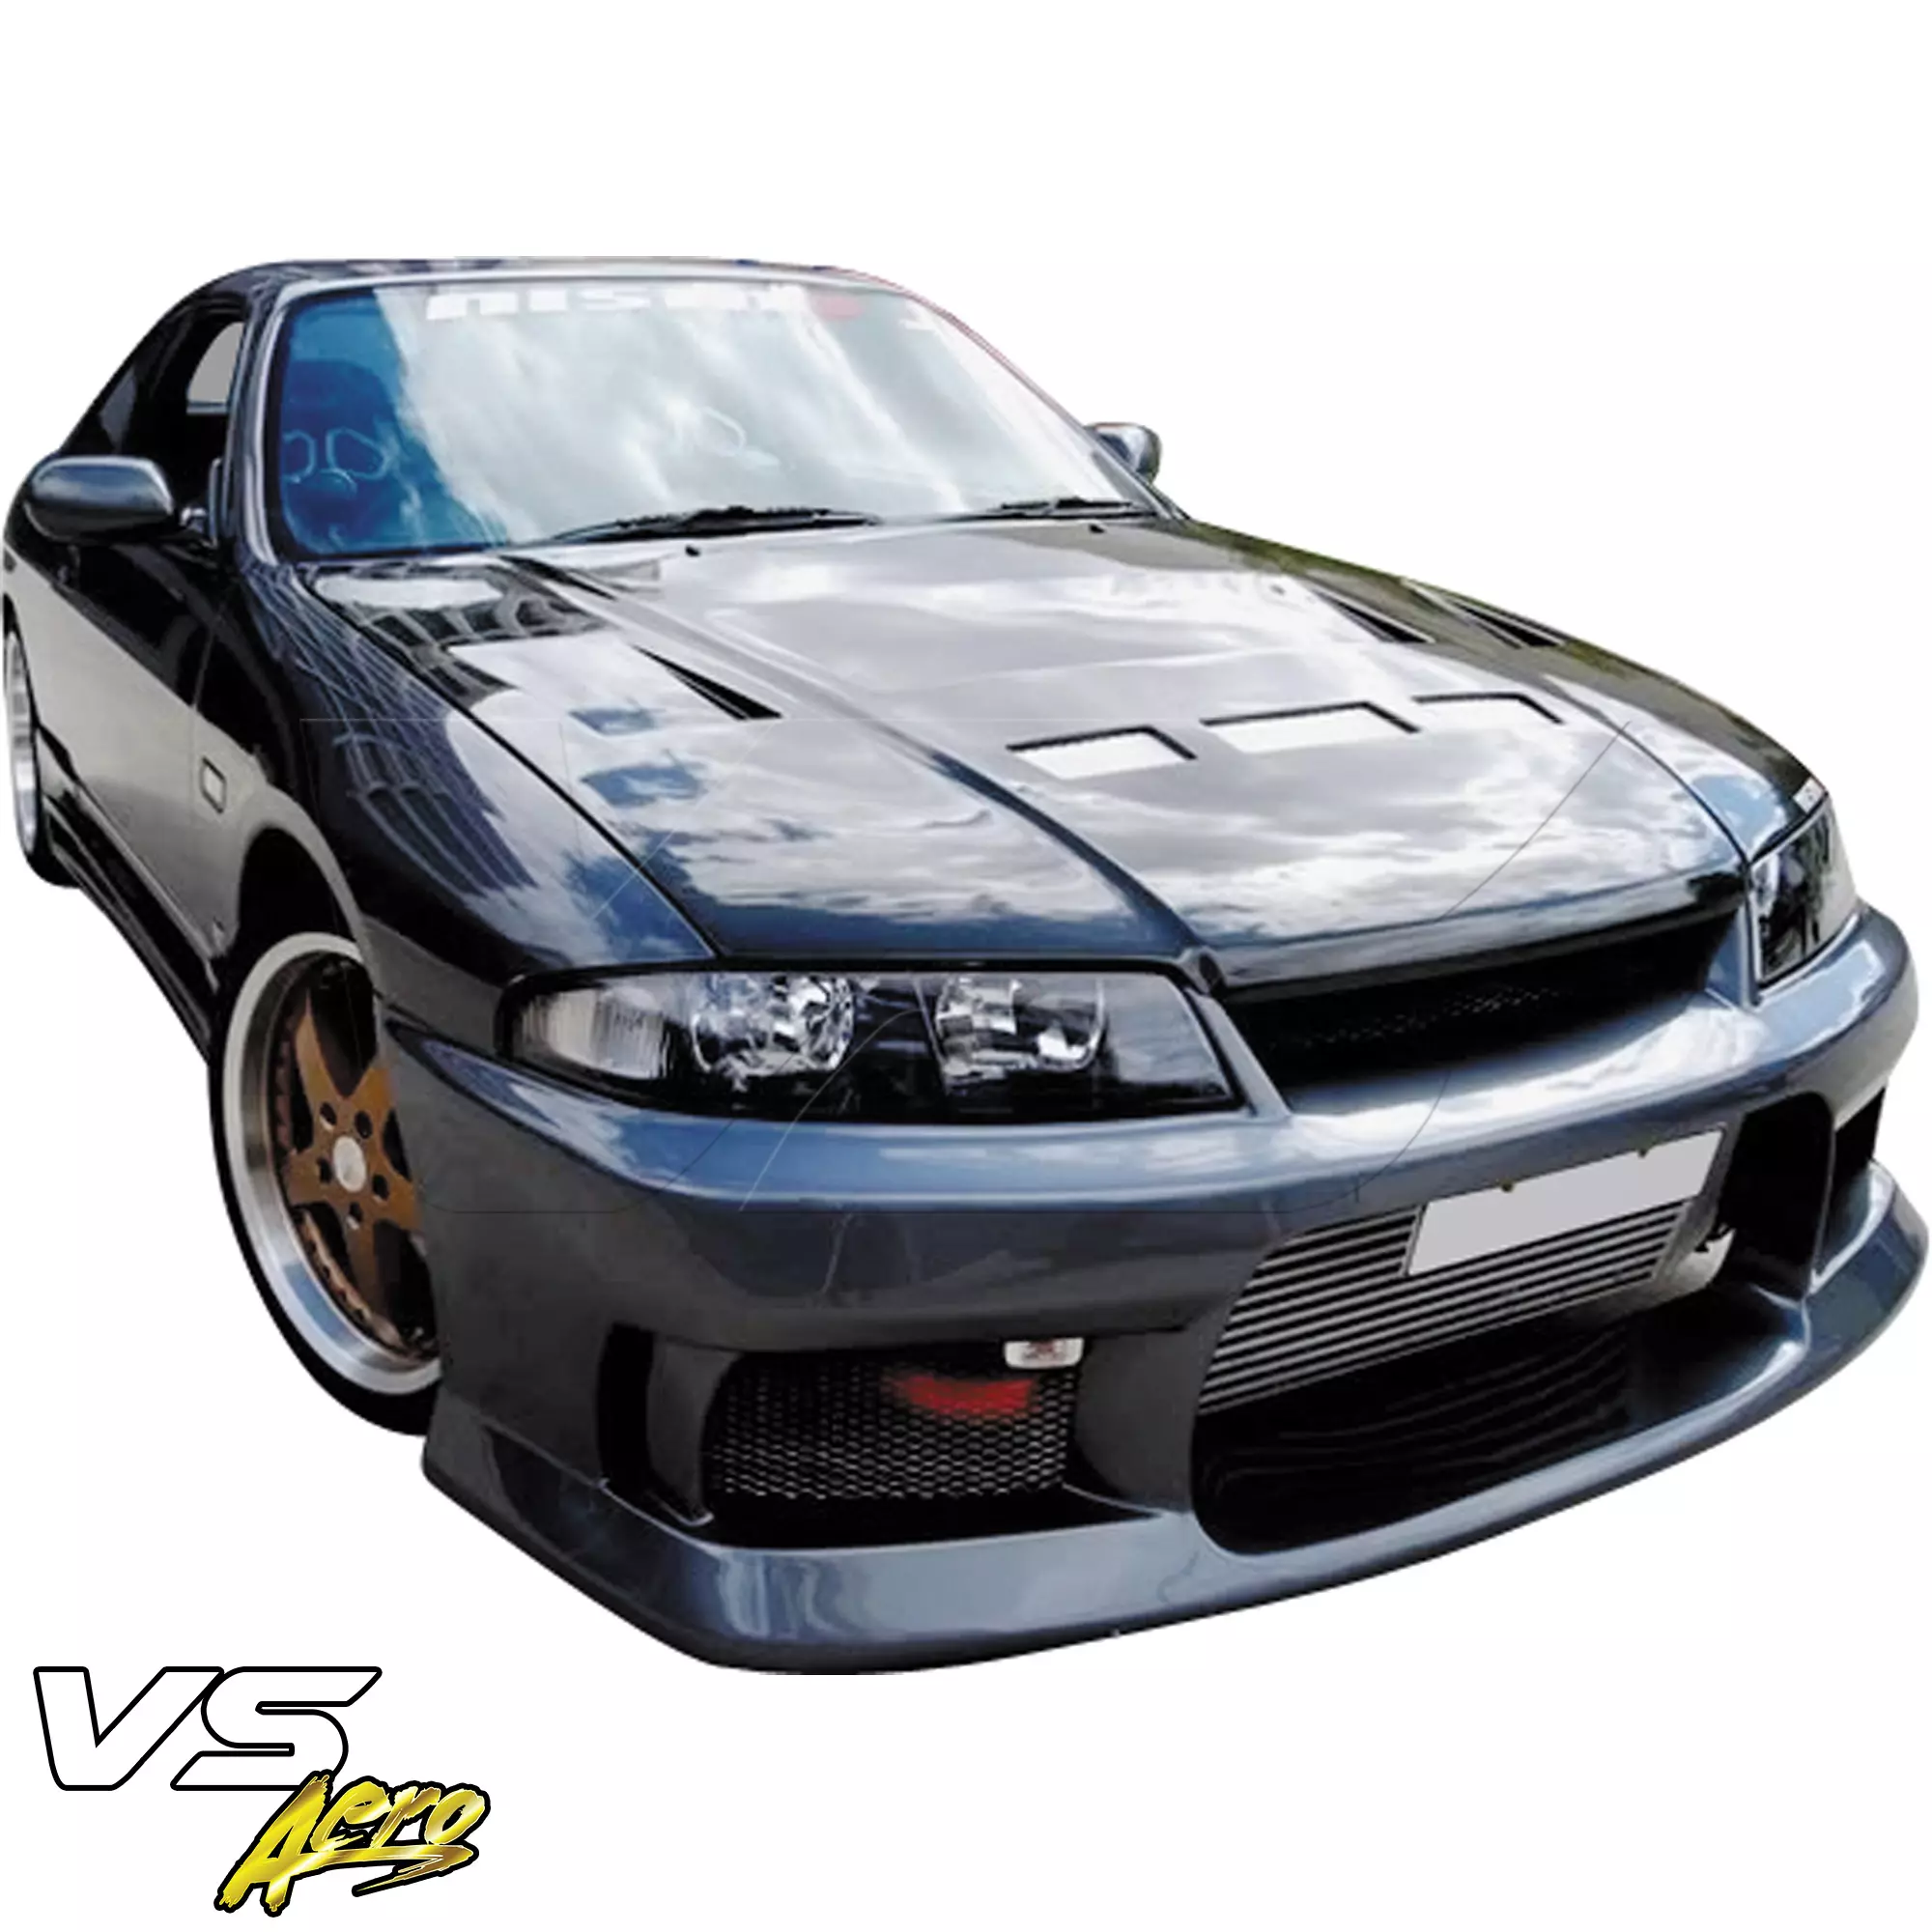 VSaero FRP MSPO v2 Body Kit 4pc > Nissan Skyline R33 GTS 1995-1998 > 2dr Coupe - Image 7